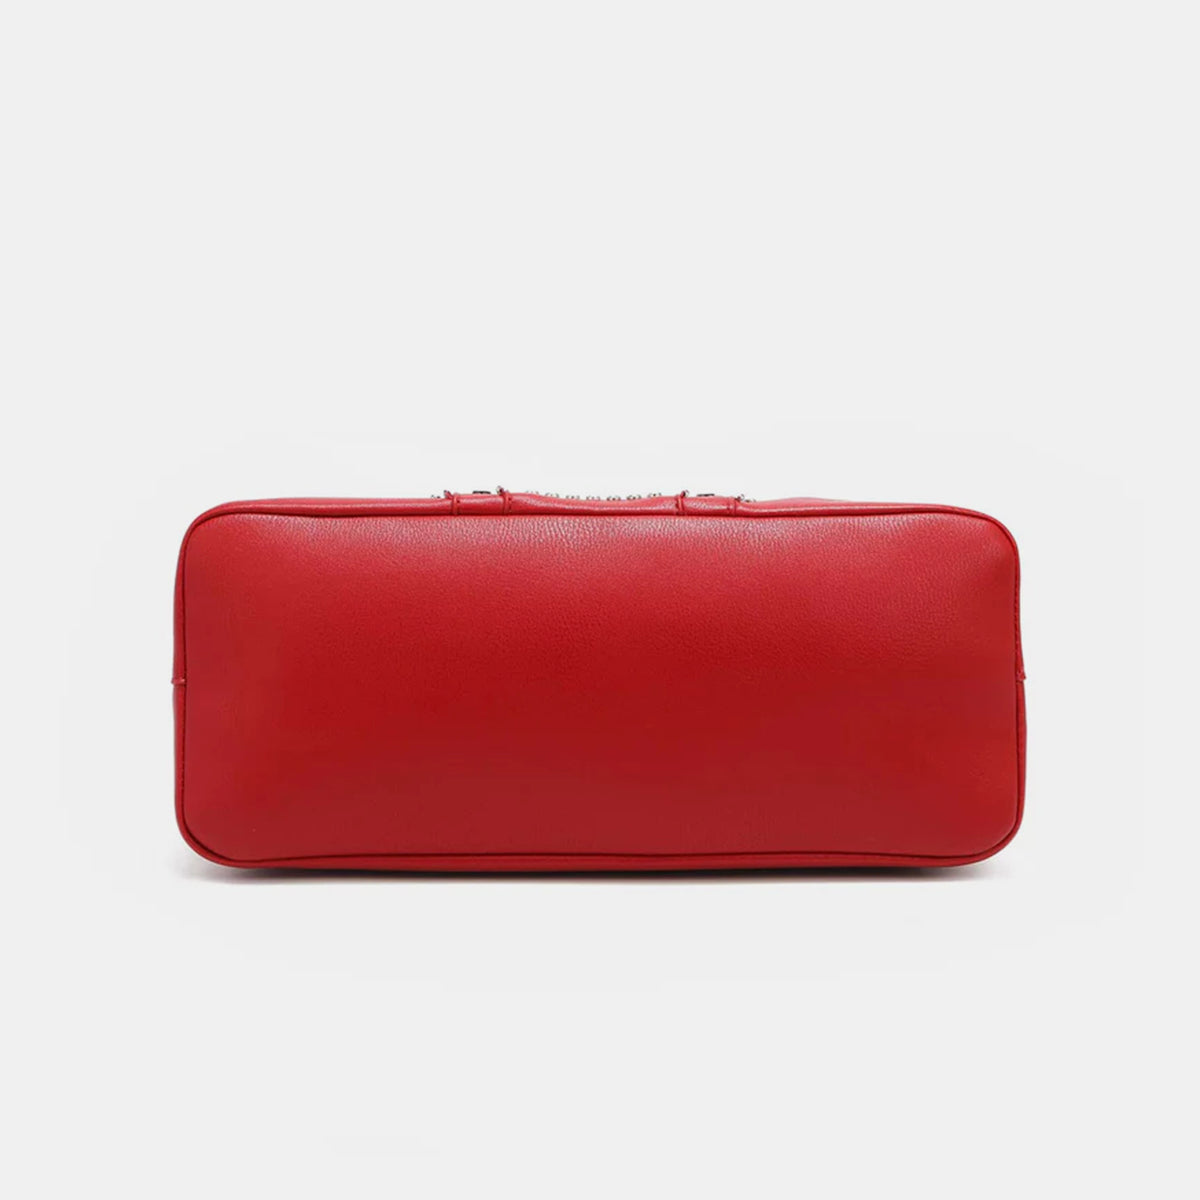 TEEK- NL Studded Decor Handbag BAG TEEK Trend   